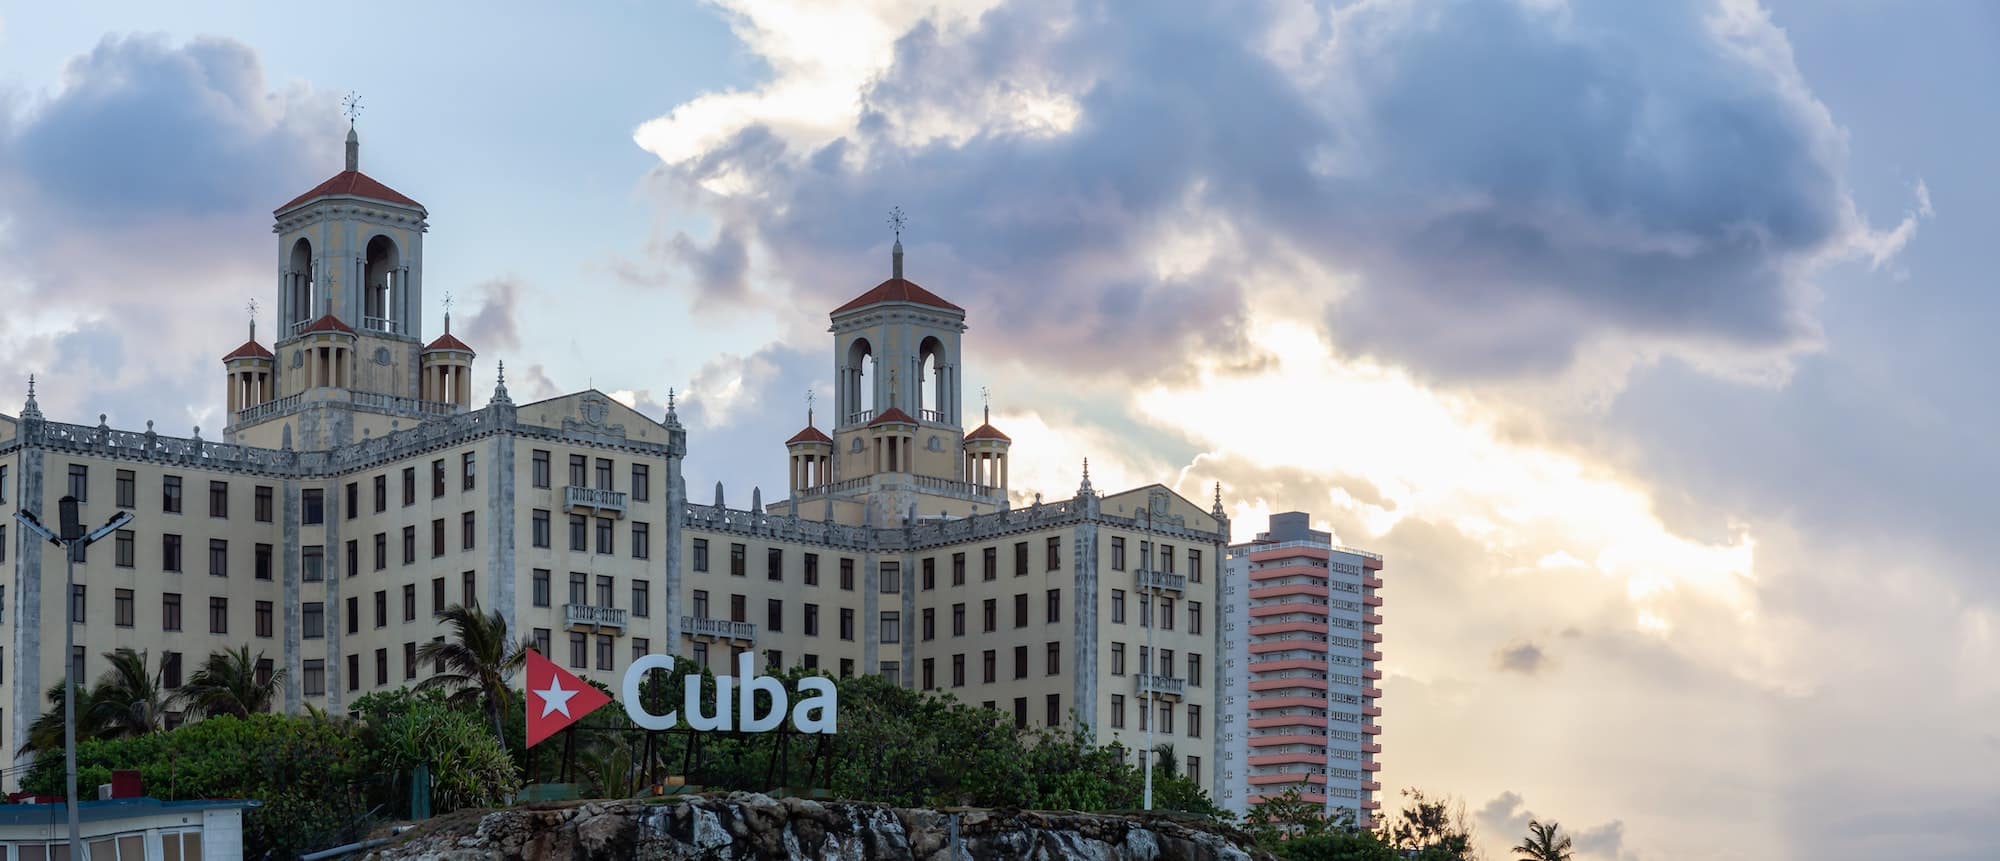 Old Havana City, Capital of Cuba